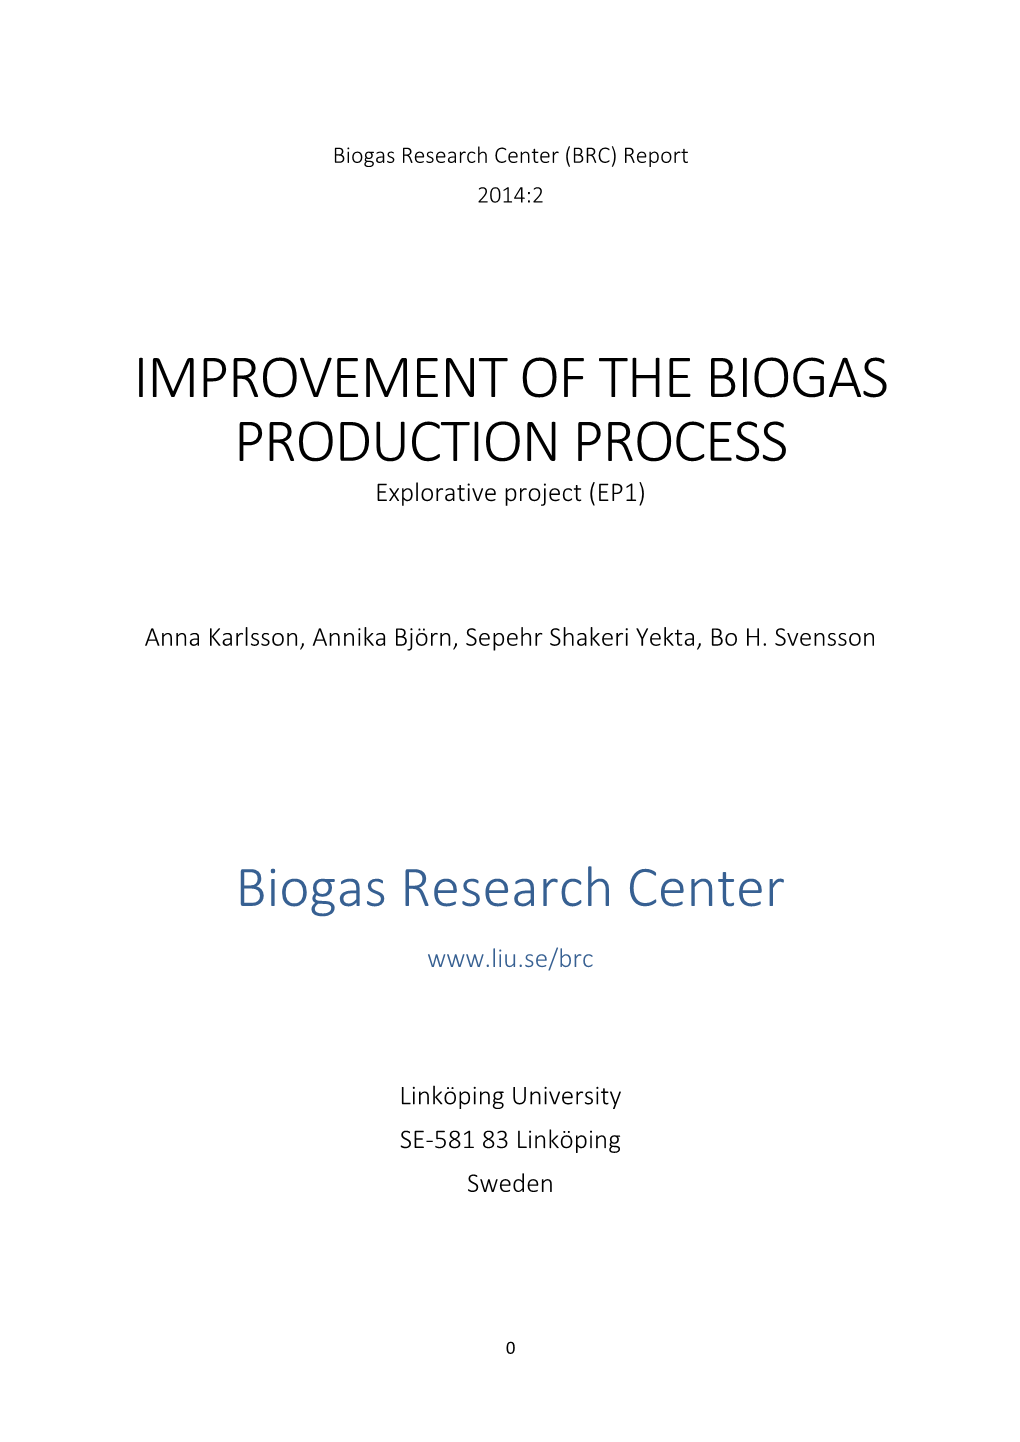 IMPROVEMENT of the BIOGAS PRODUCTION PROCESS Explorative Project (EP1)